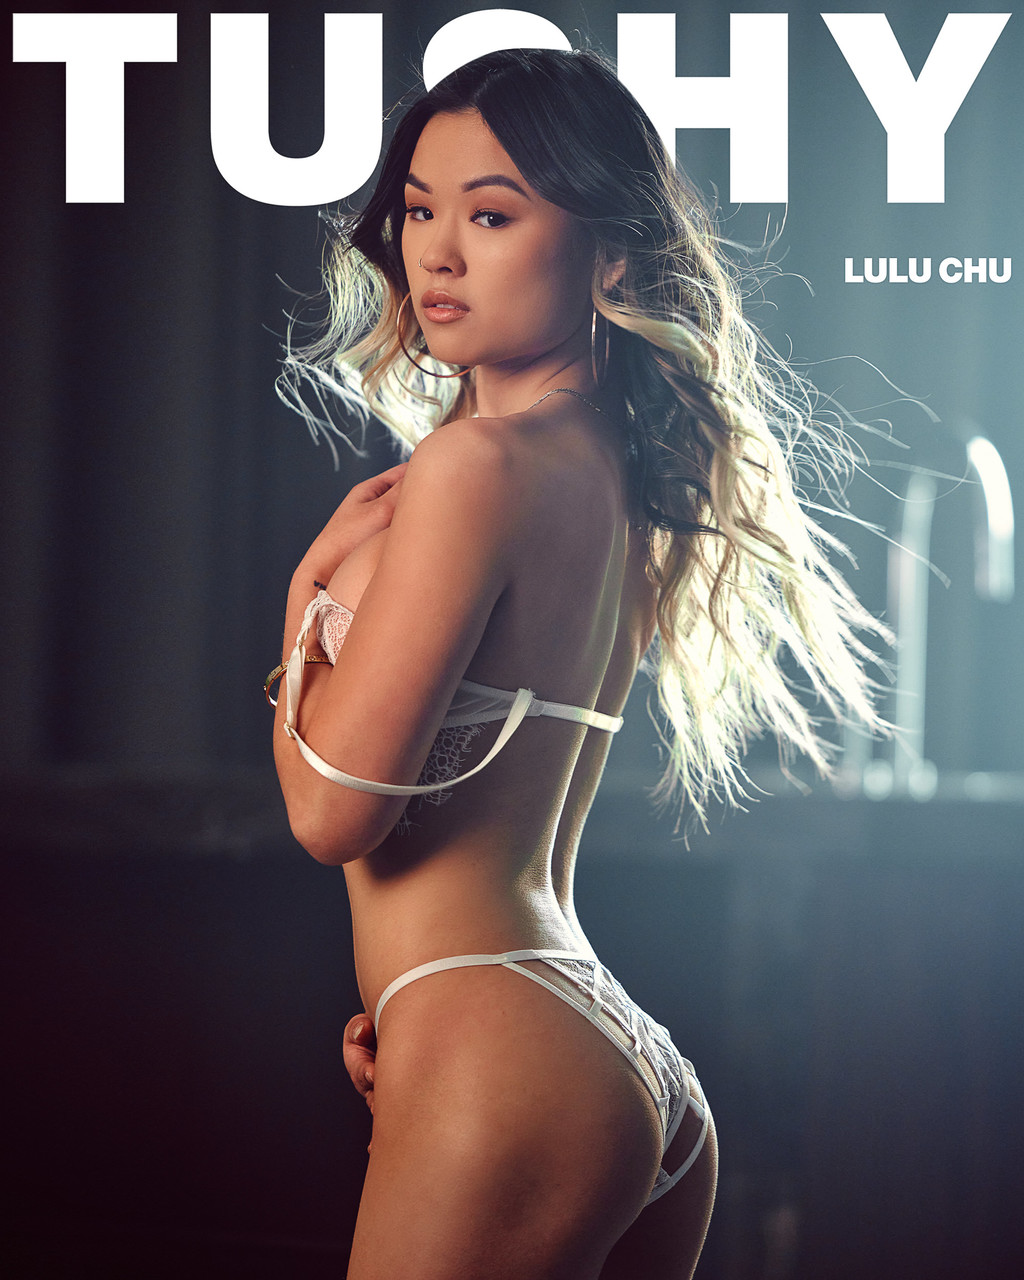 Petite Asian Lulu Chu gets anal fucked & gives an ass to mouth cock licking foto porno #425580936 | Tushy Pics, Lulu Chu, Mick Blue, Asian, porno ponsel